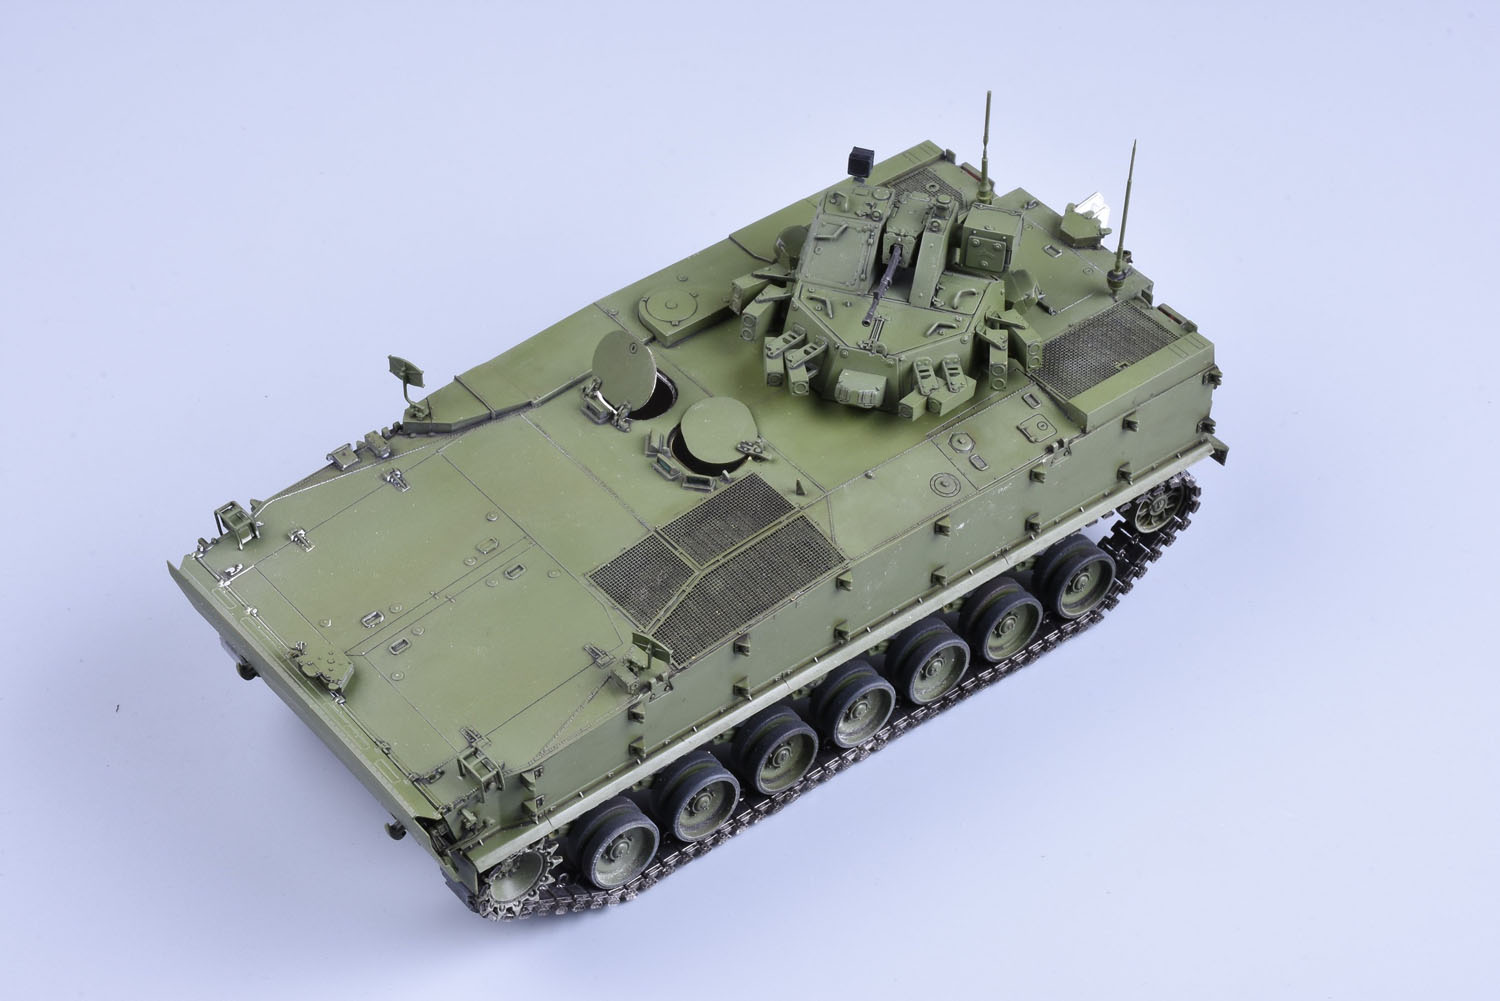 1/35 Kurganet-25, BTR Object 693 - Click Image to Close